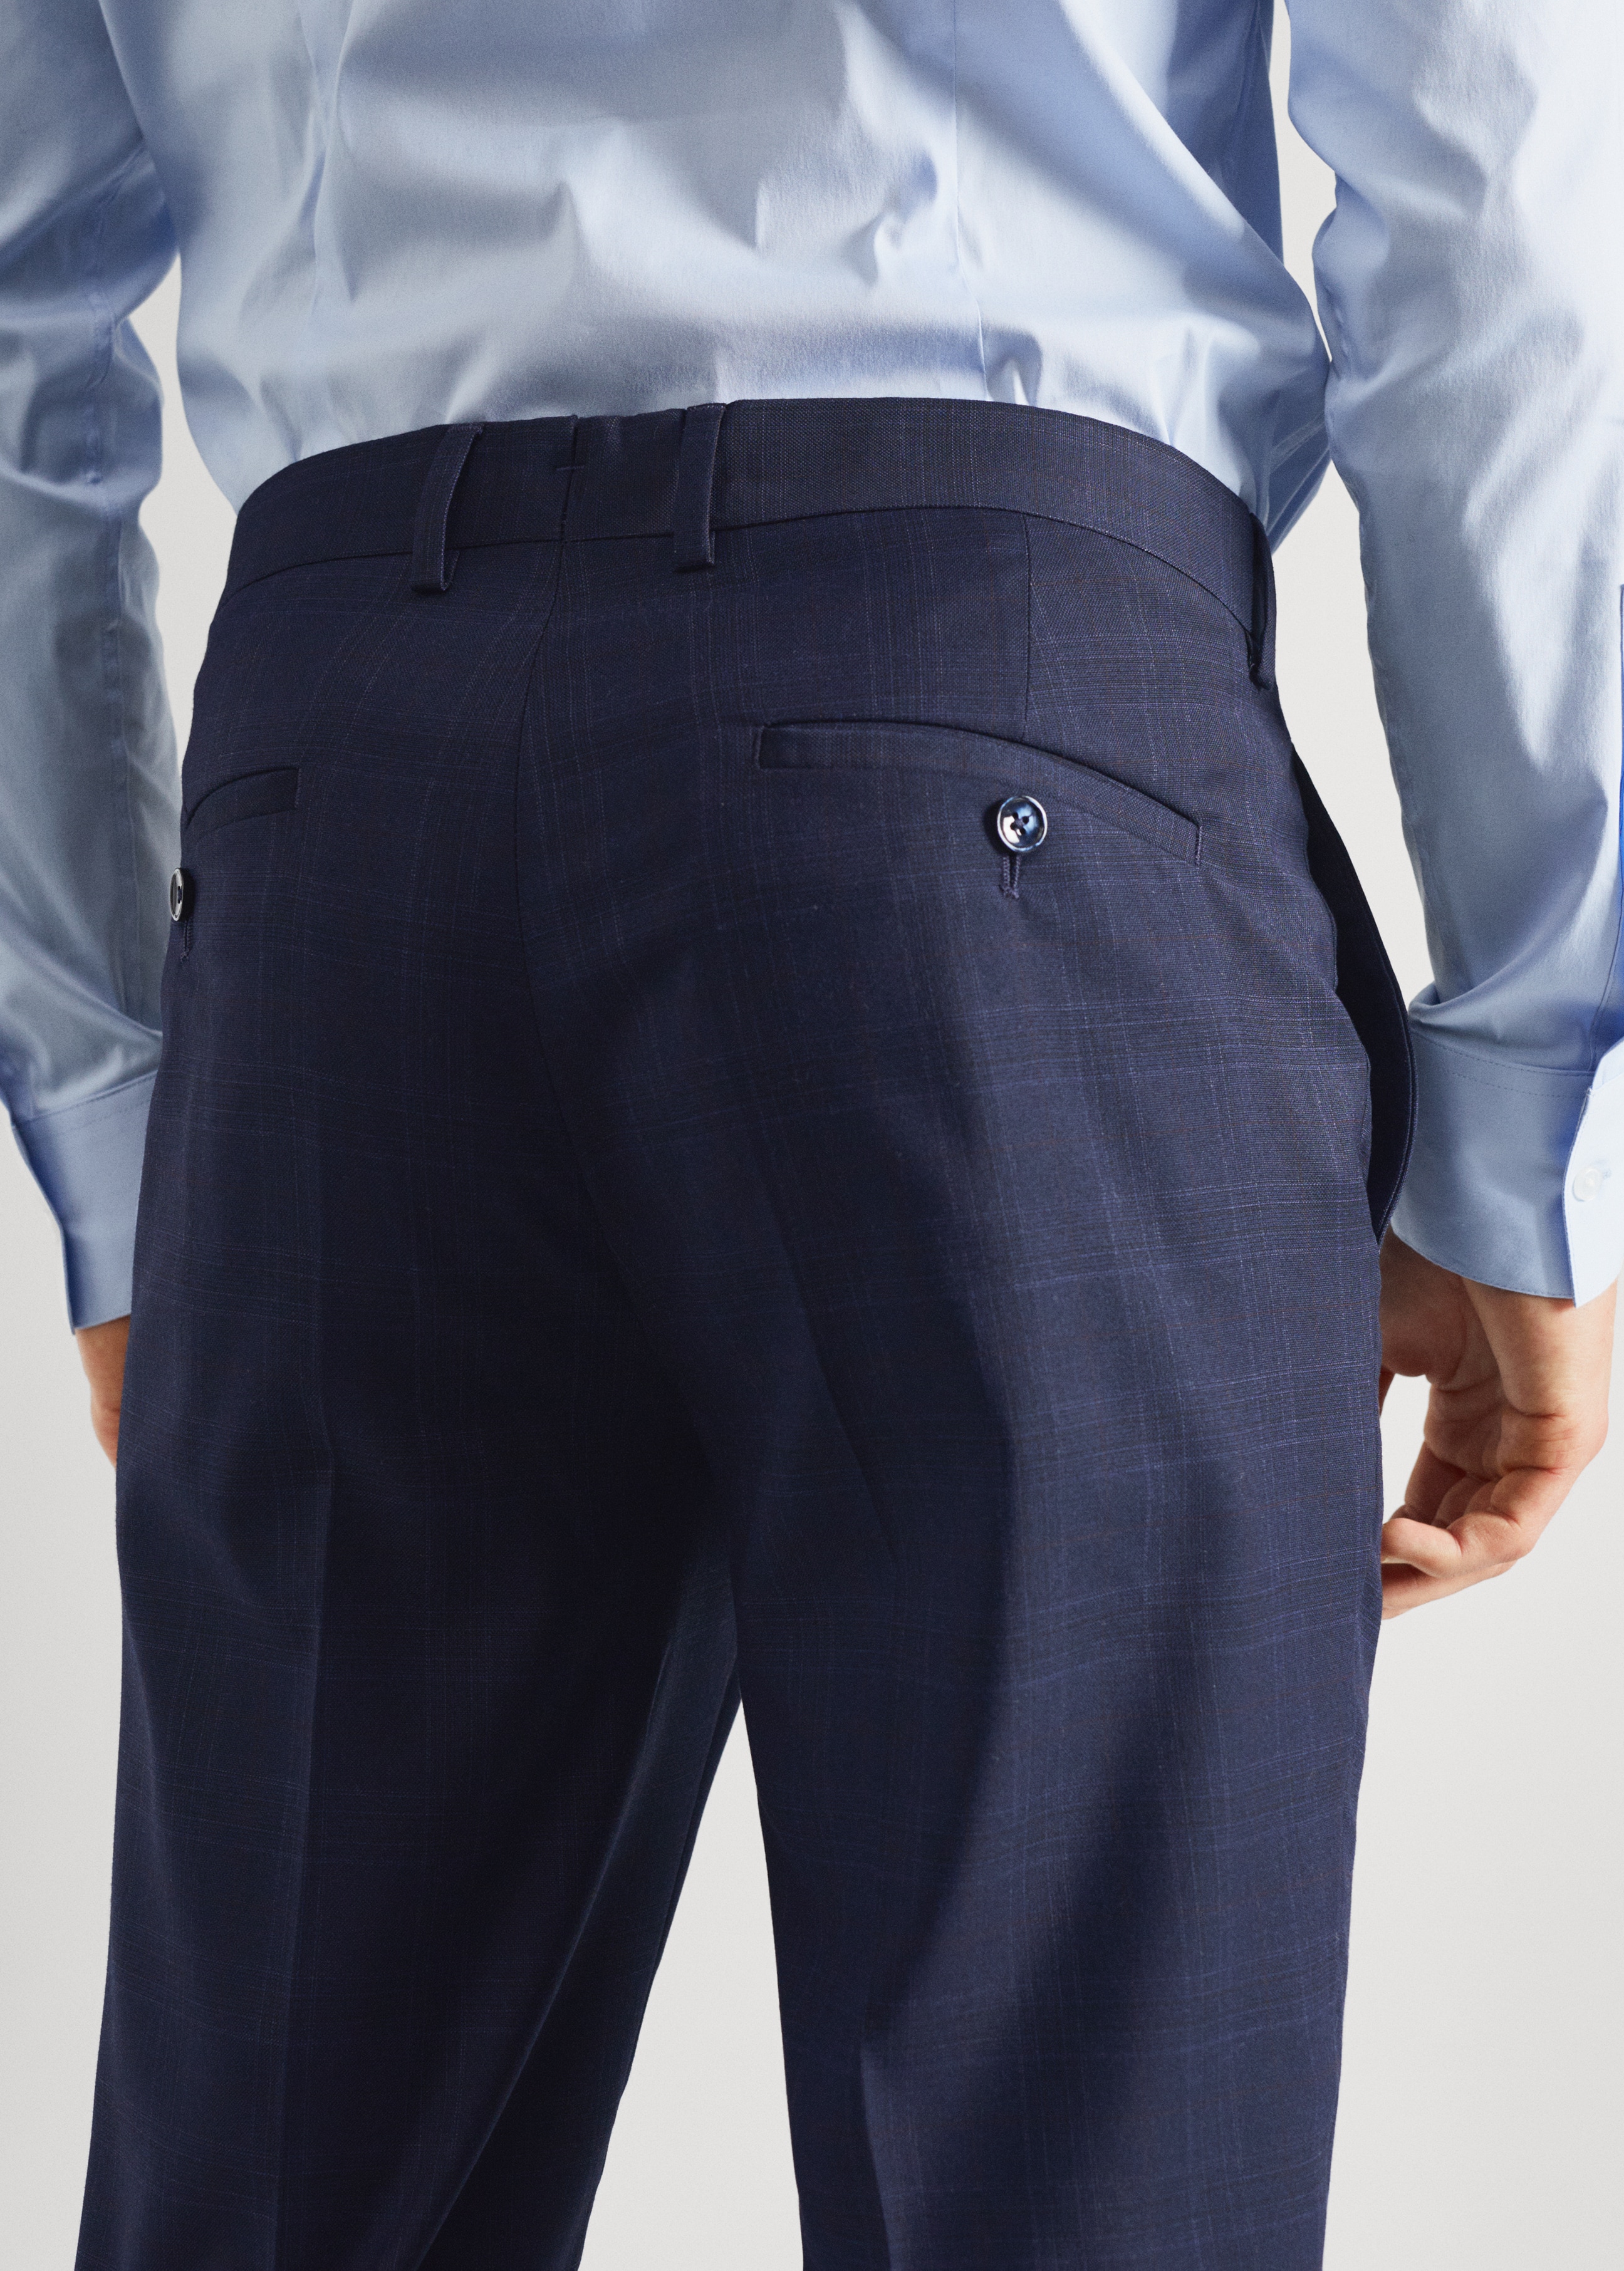 Super slim fit suit trousers - Details of the article 6